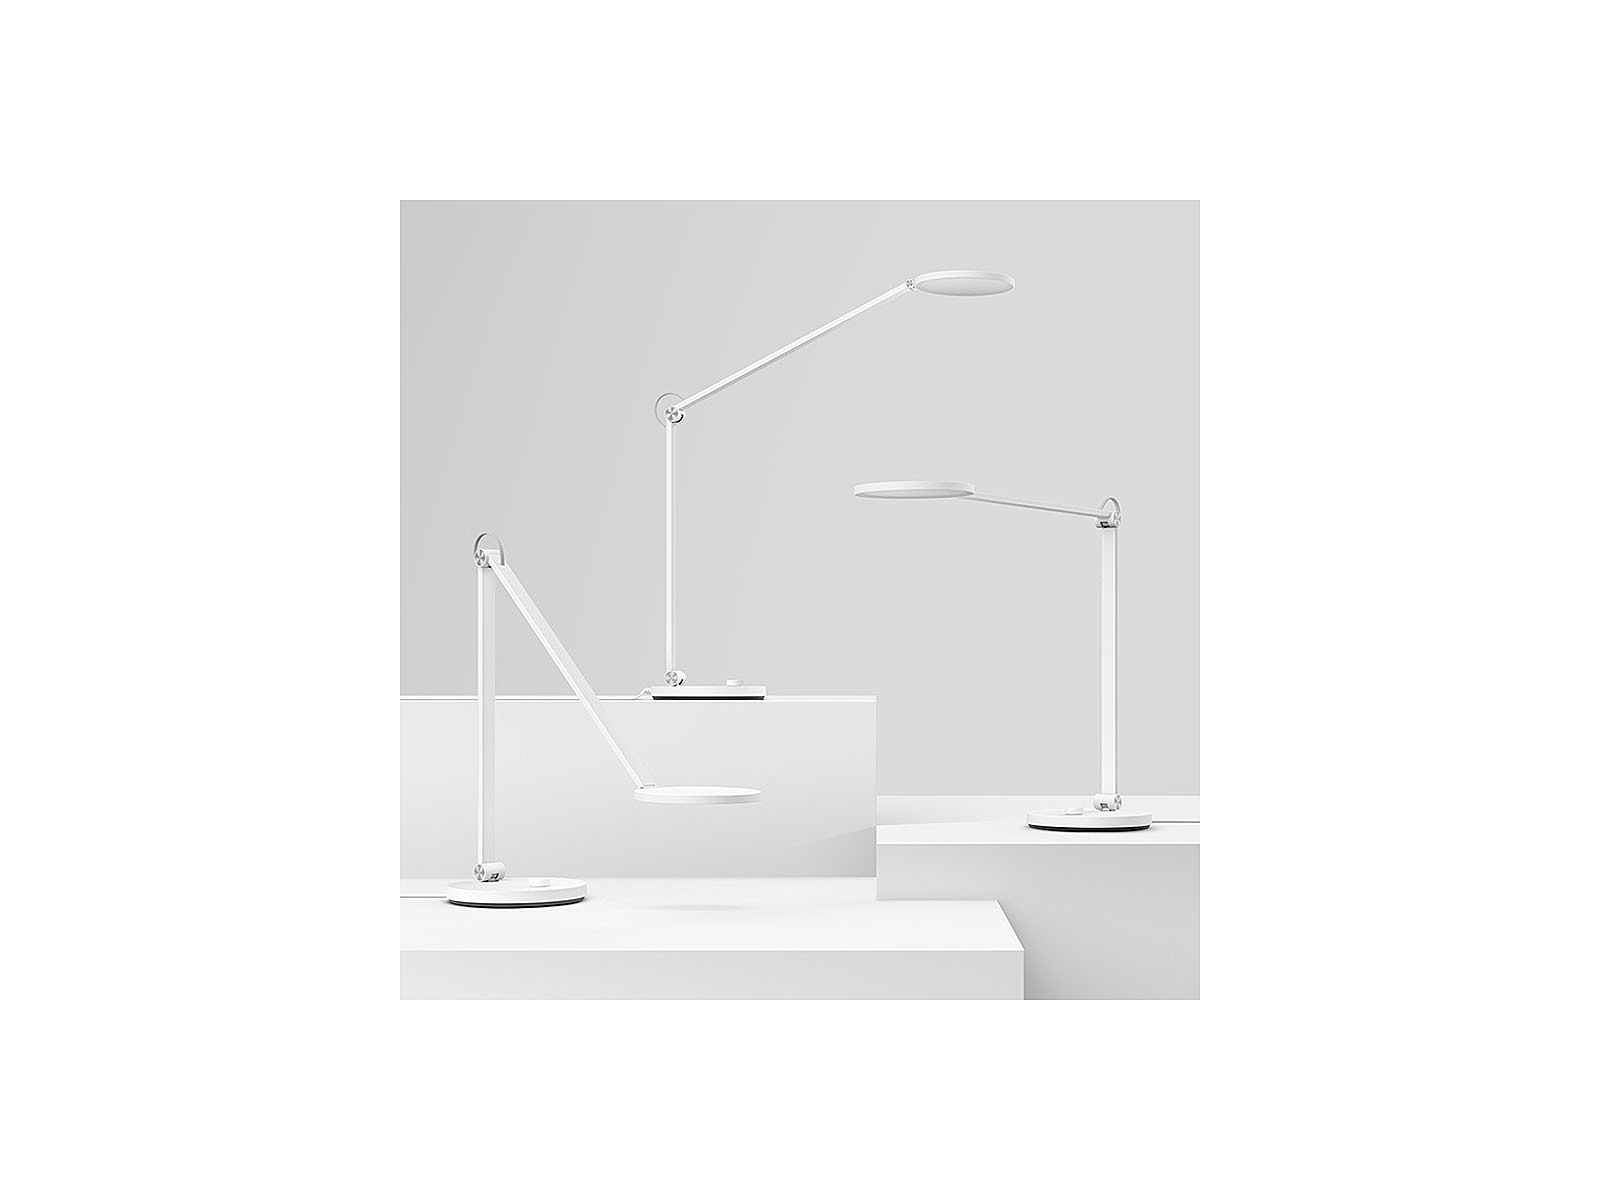 Pro Mi Lamp Xiaomi (BHR4119GL) Smart LED (White) Desk